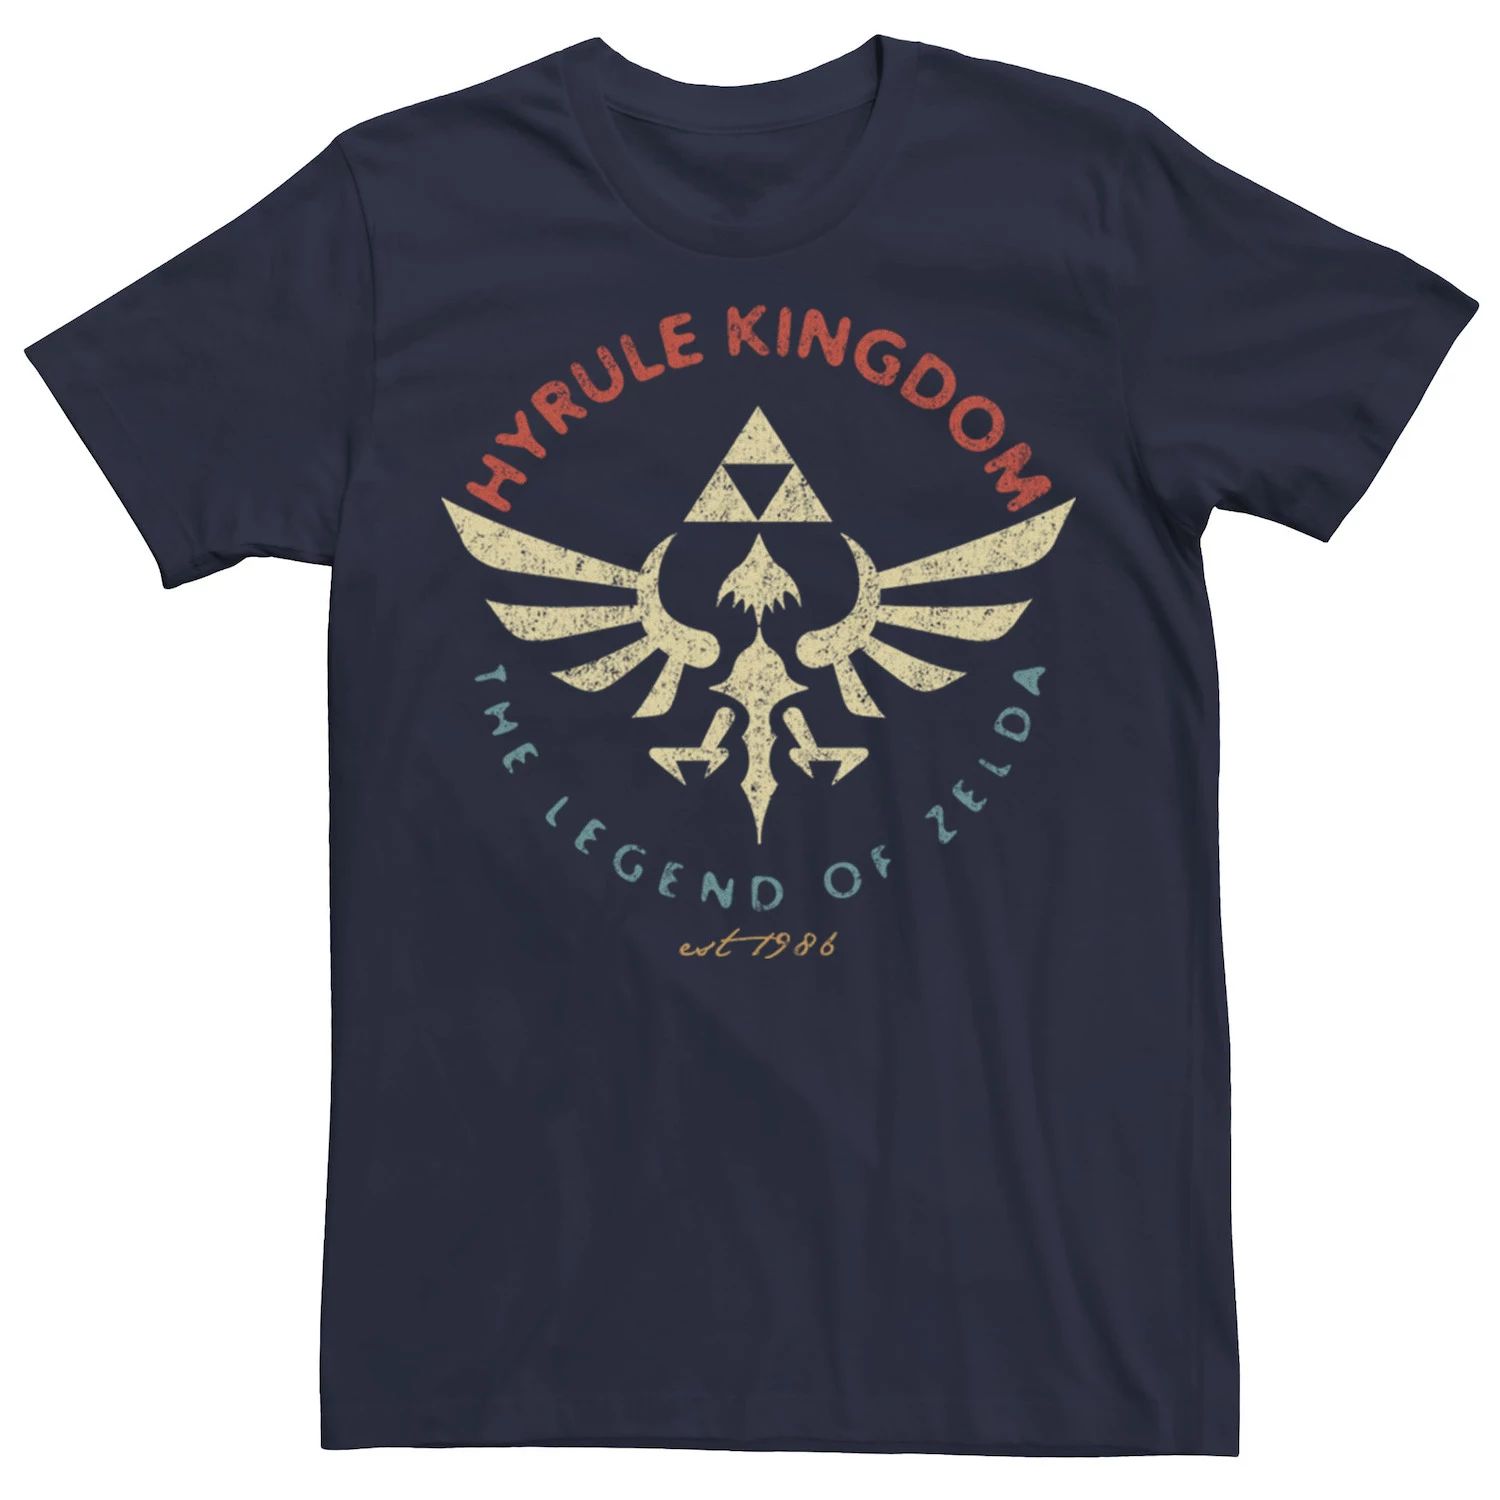 Мужская футболка с графическим плакатом Nintendo Legend Of Zelda Hyrule Kingdom Tri Force Licensed Character, синий кошелек zelda golden tri force logo pouch